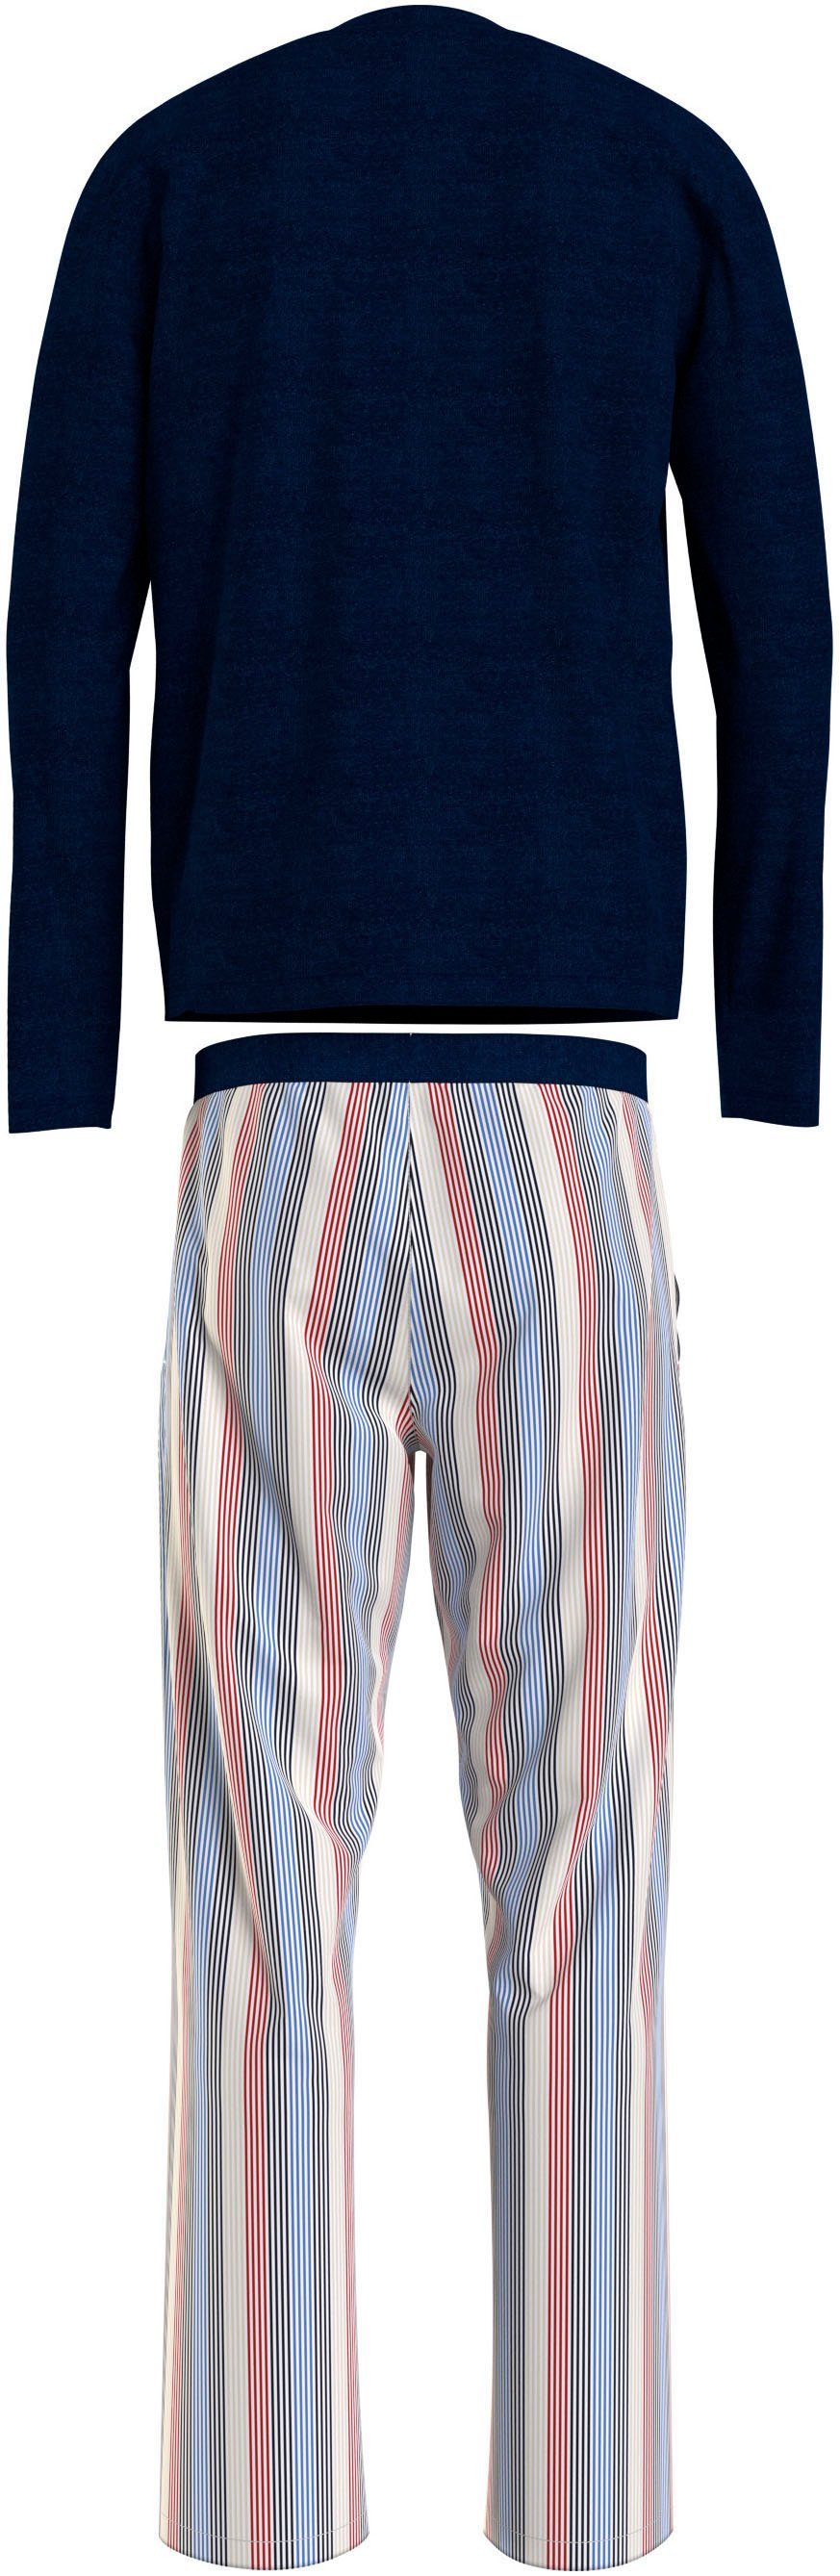 LS Logobund (Set, SET PRINT Tommy Pyjama 2 2er) WOVEN tlg., Underwear mit PANT Hilfiger